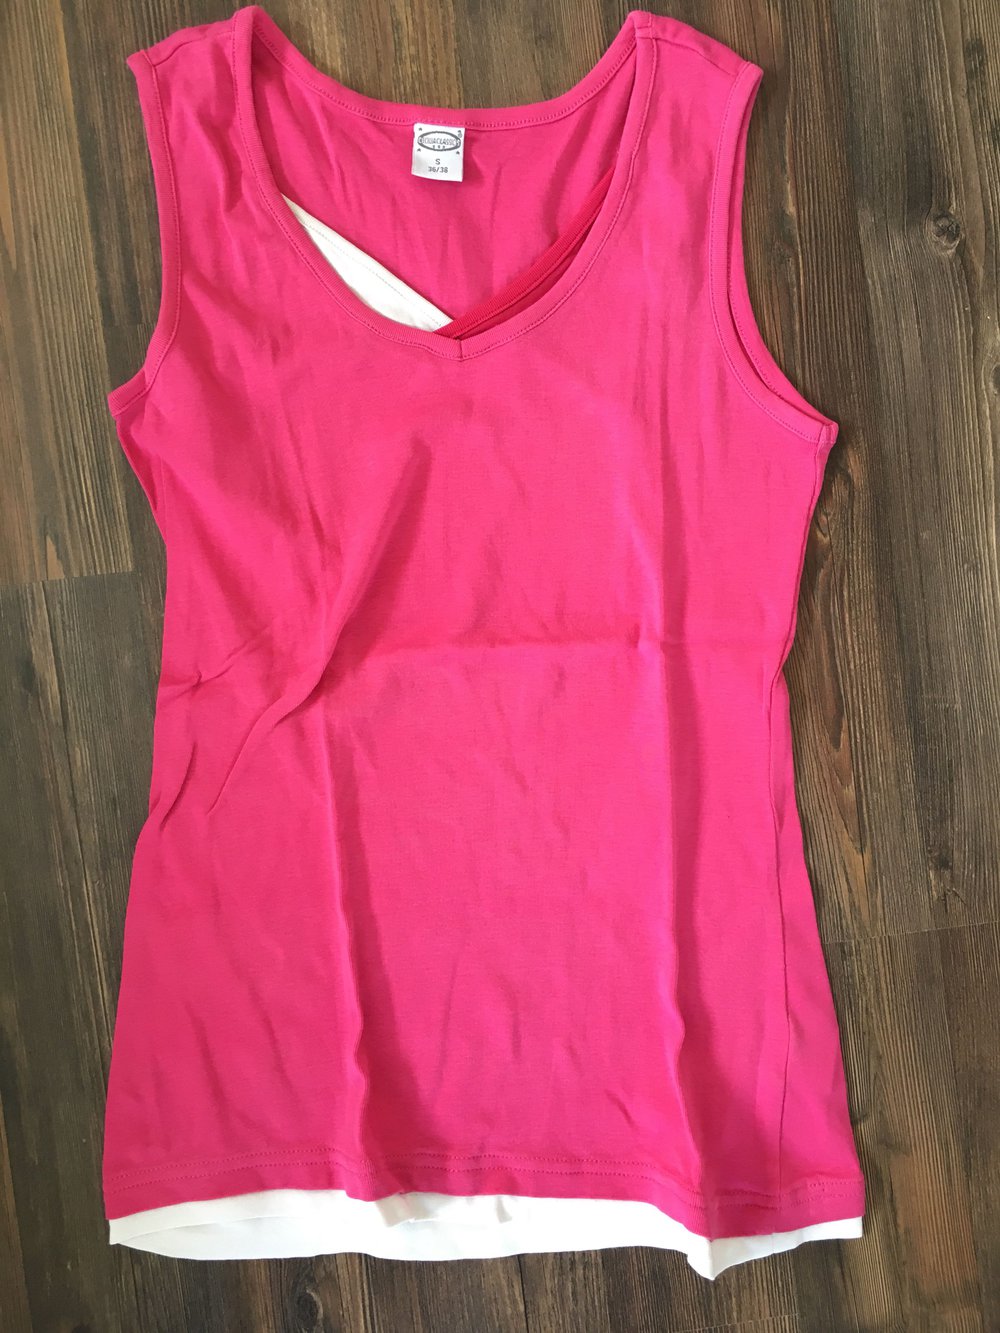 Pinkes Top Größe S (36/38) Oberteil Trägertop Tanktop Shirt 